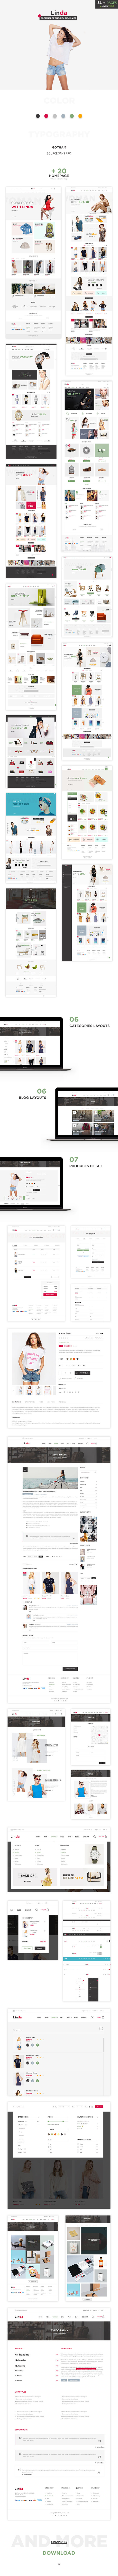 Linda - Mutilpurpose eCommerce Shopify Theme - 2